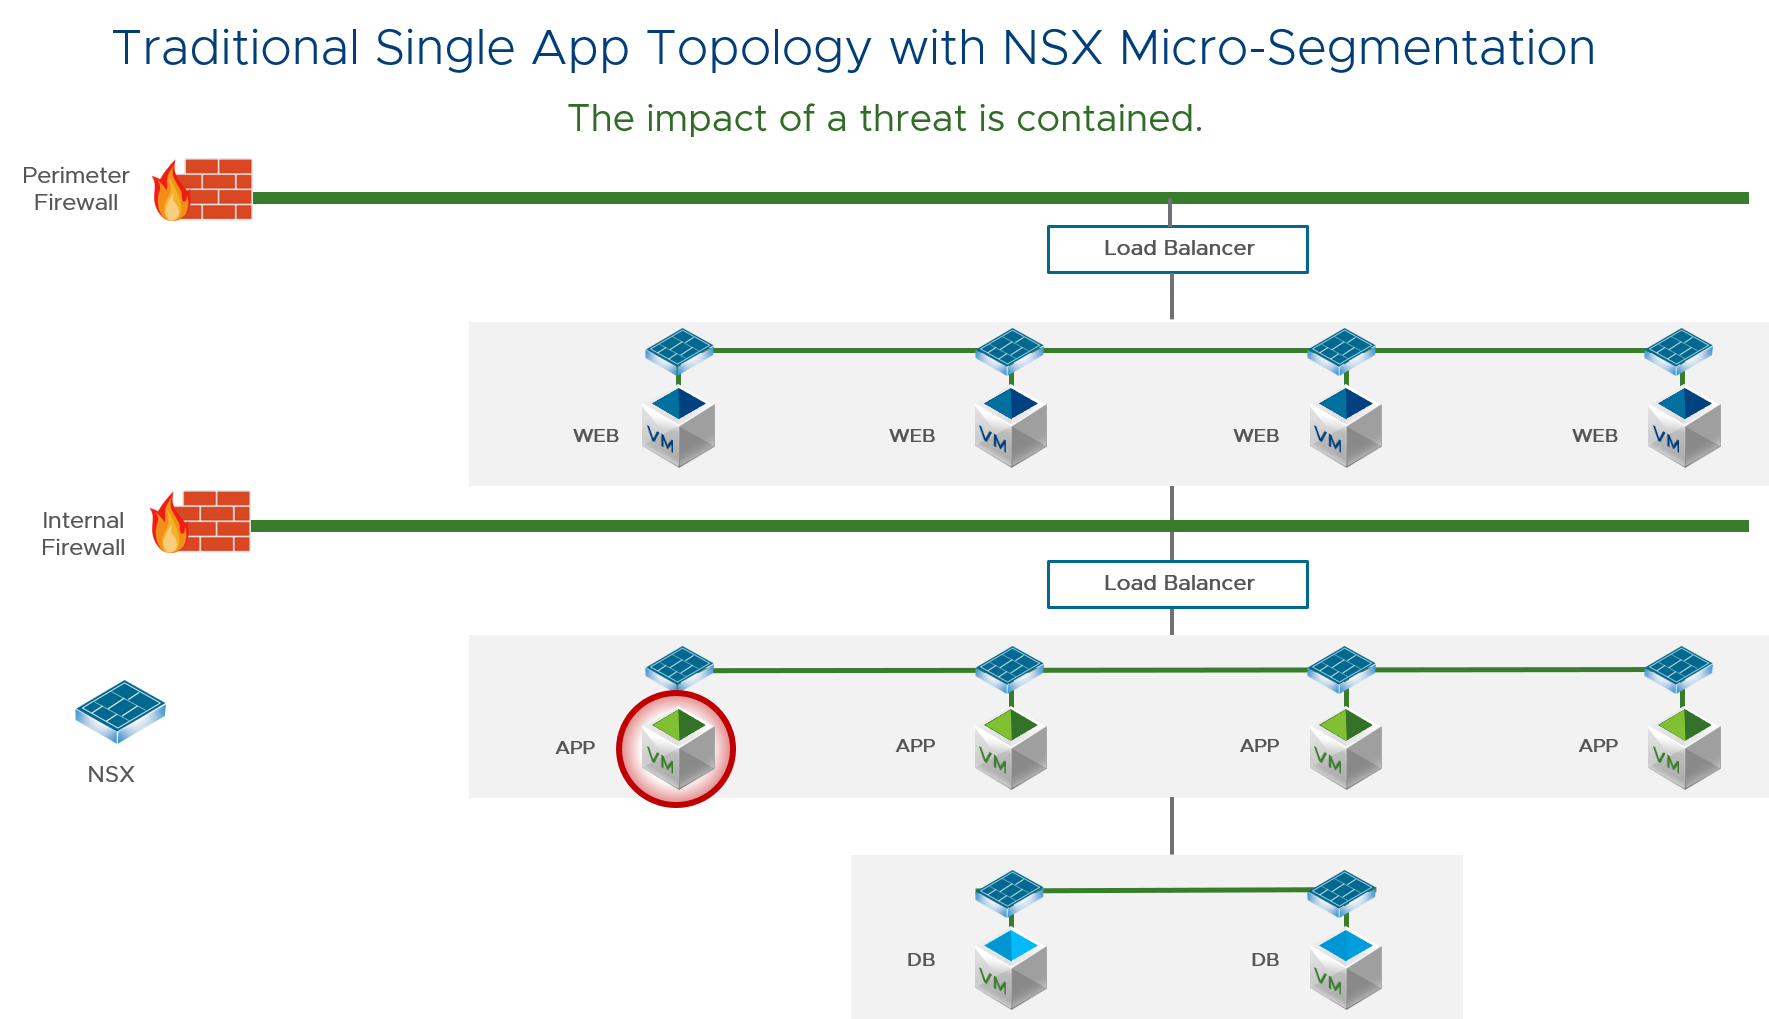 NSX micro-segmentation overview